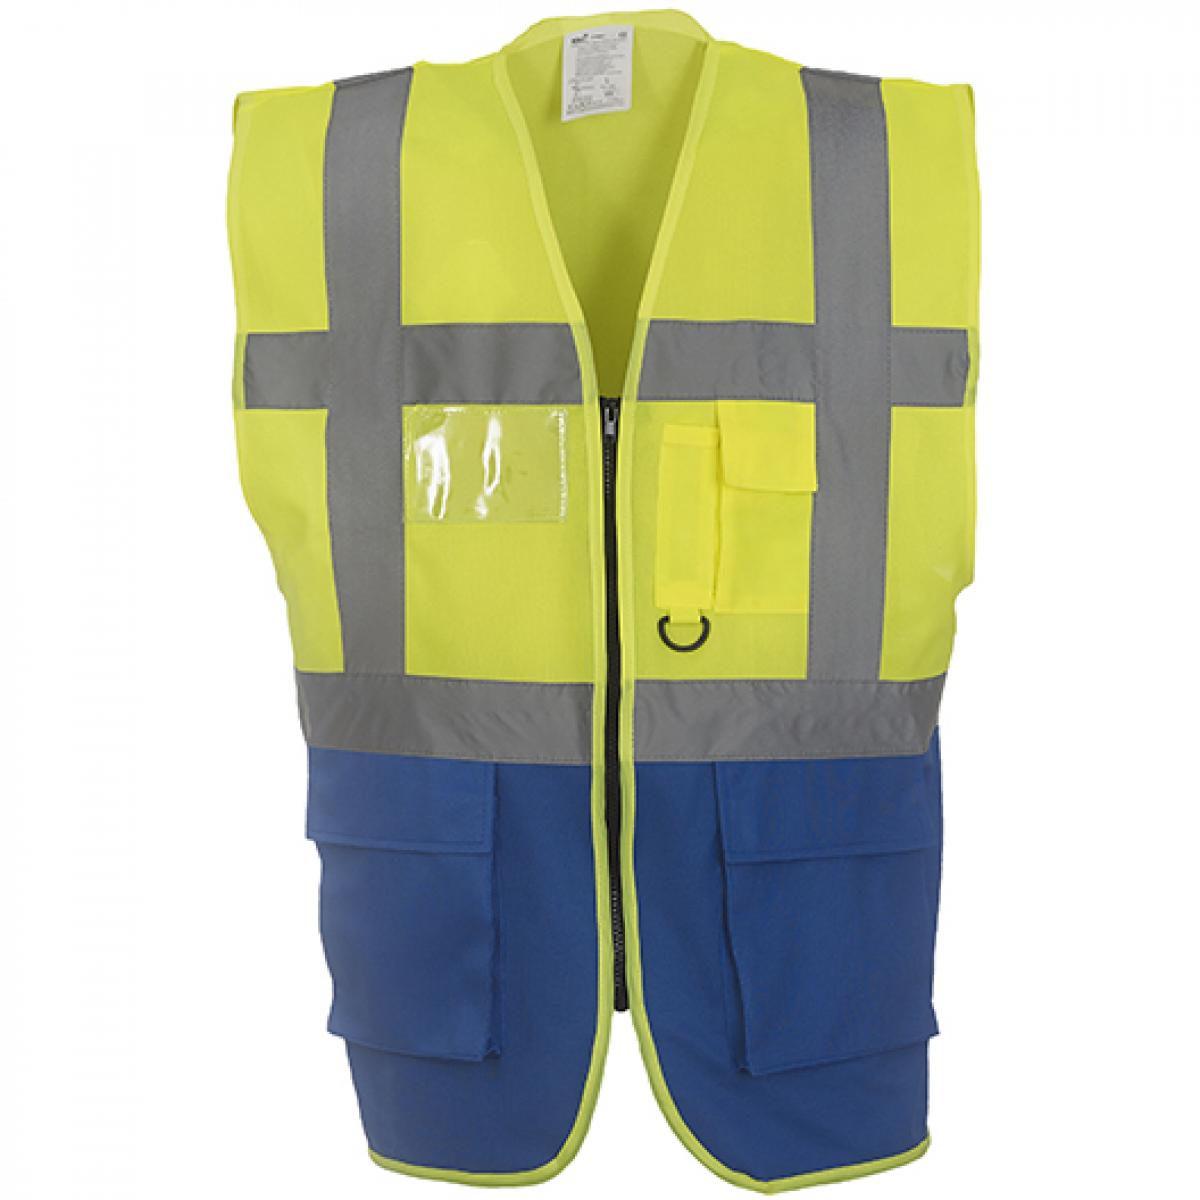 Hersteller: YOKO Herstellernummer: HVW801 Artikelbezeichnung: Herren Multi-Functional Executive Waistcoat Farbe: Hi-Vis Yellow/Royal Blue